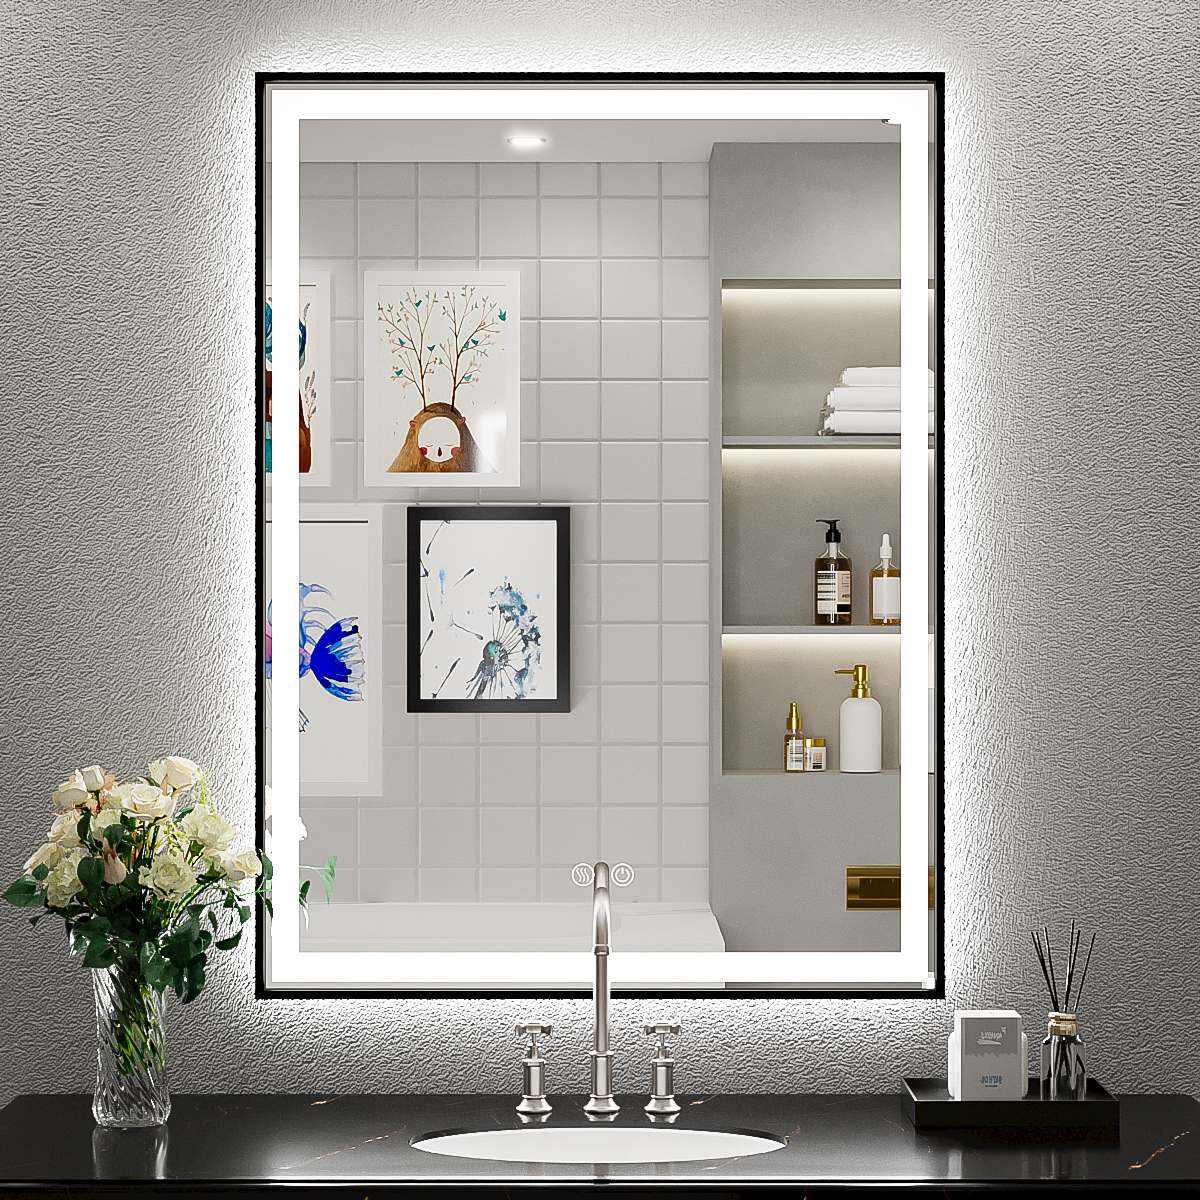 JJGullit bathroom mirror supplier  24x32 Inch LED Mirror, Bathroom Mirror with Lights, Wall Mounted Frontlit and backlit Lighted Vanity Mirrors, Rectangle Beveled Edge Memory Dimmable Anti-Fog